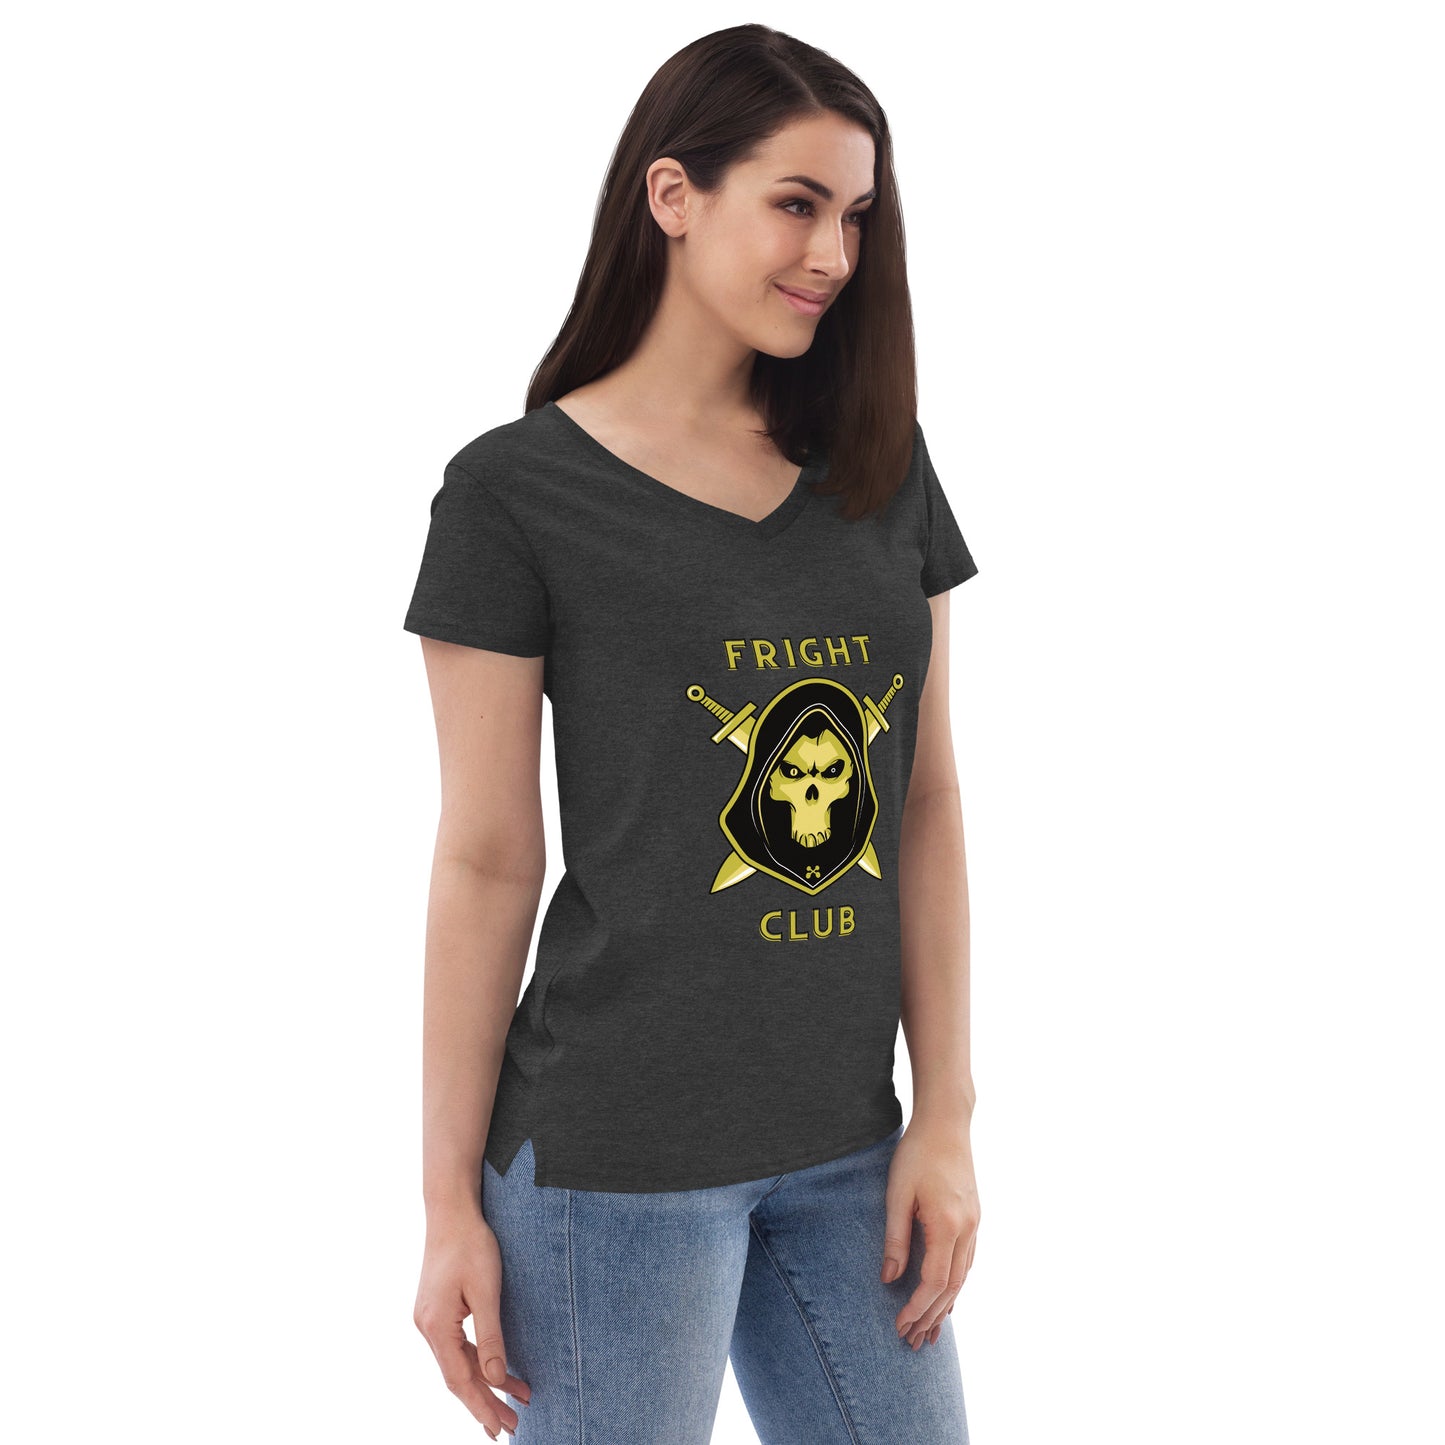 Fright Club Women’s recycled v-neck t-shirt - A. Mandaline Art